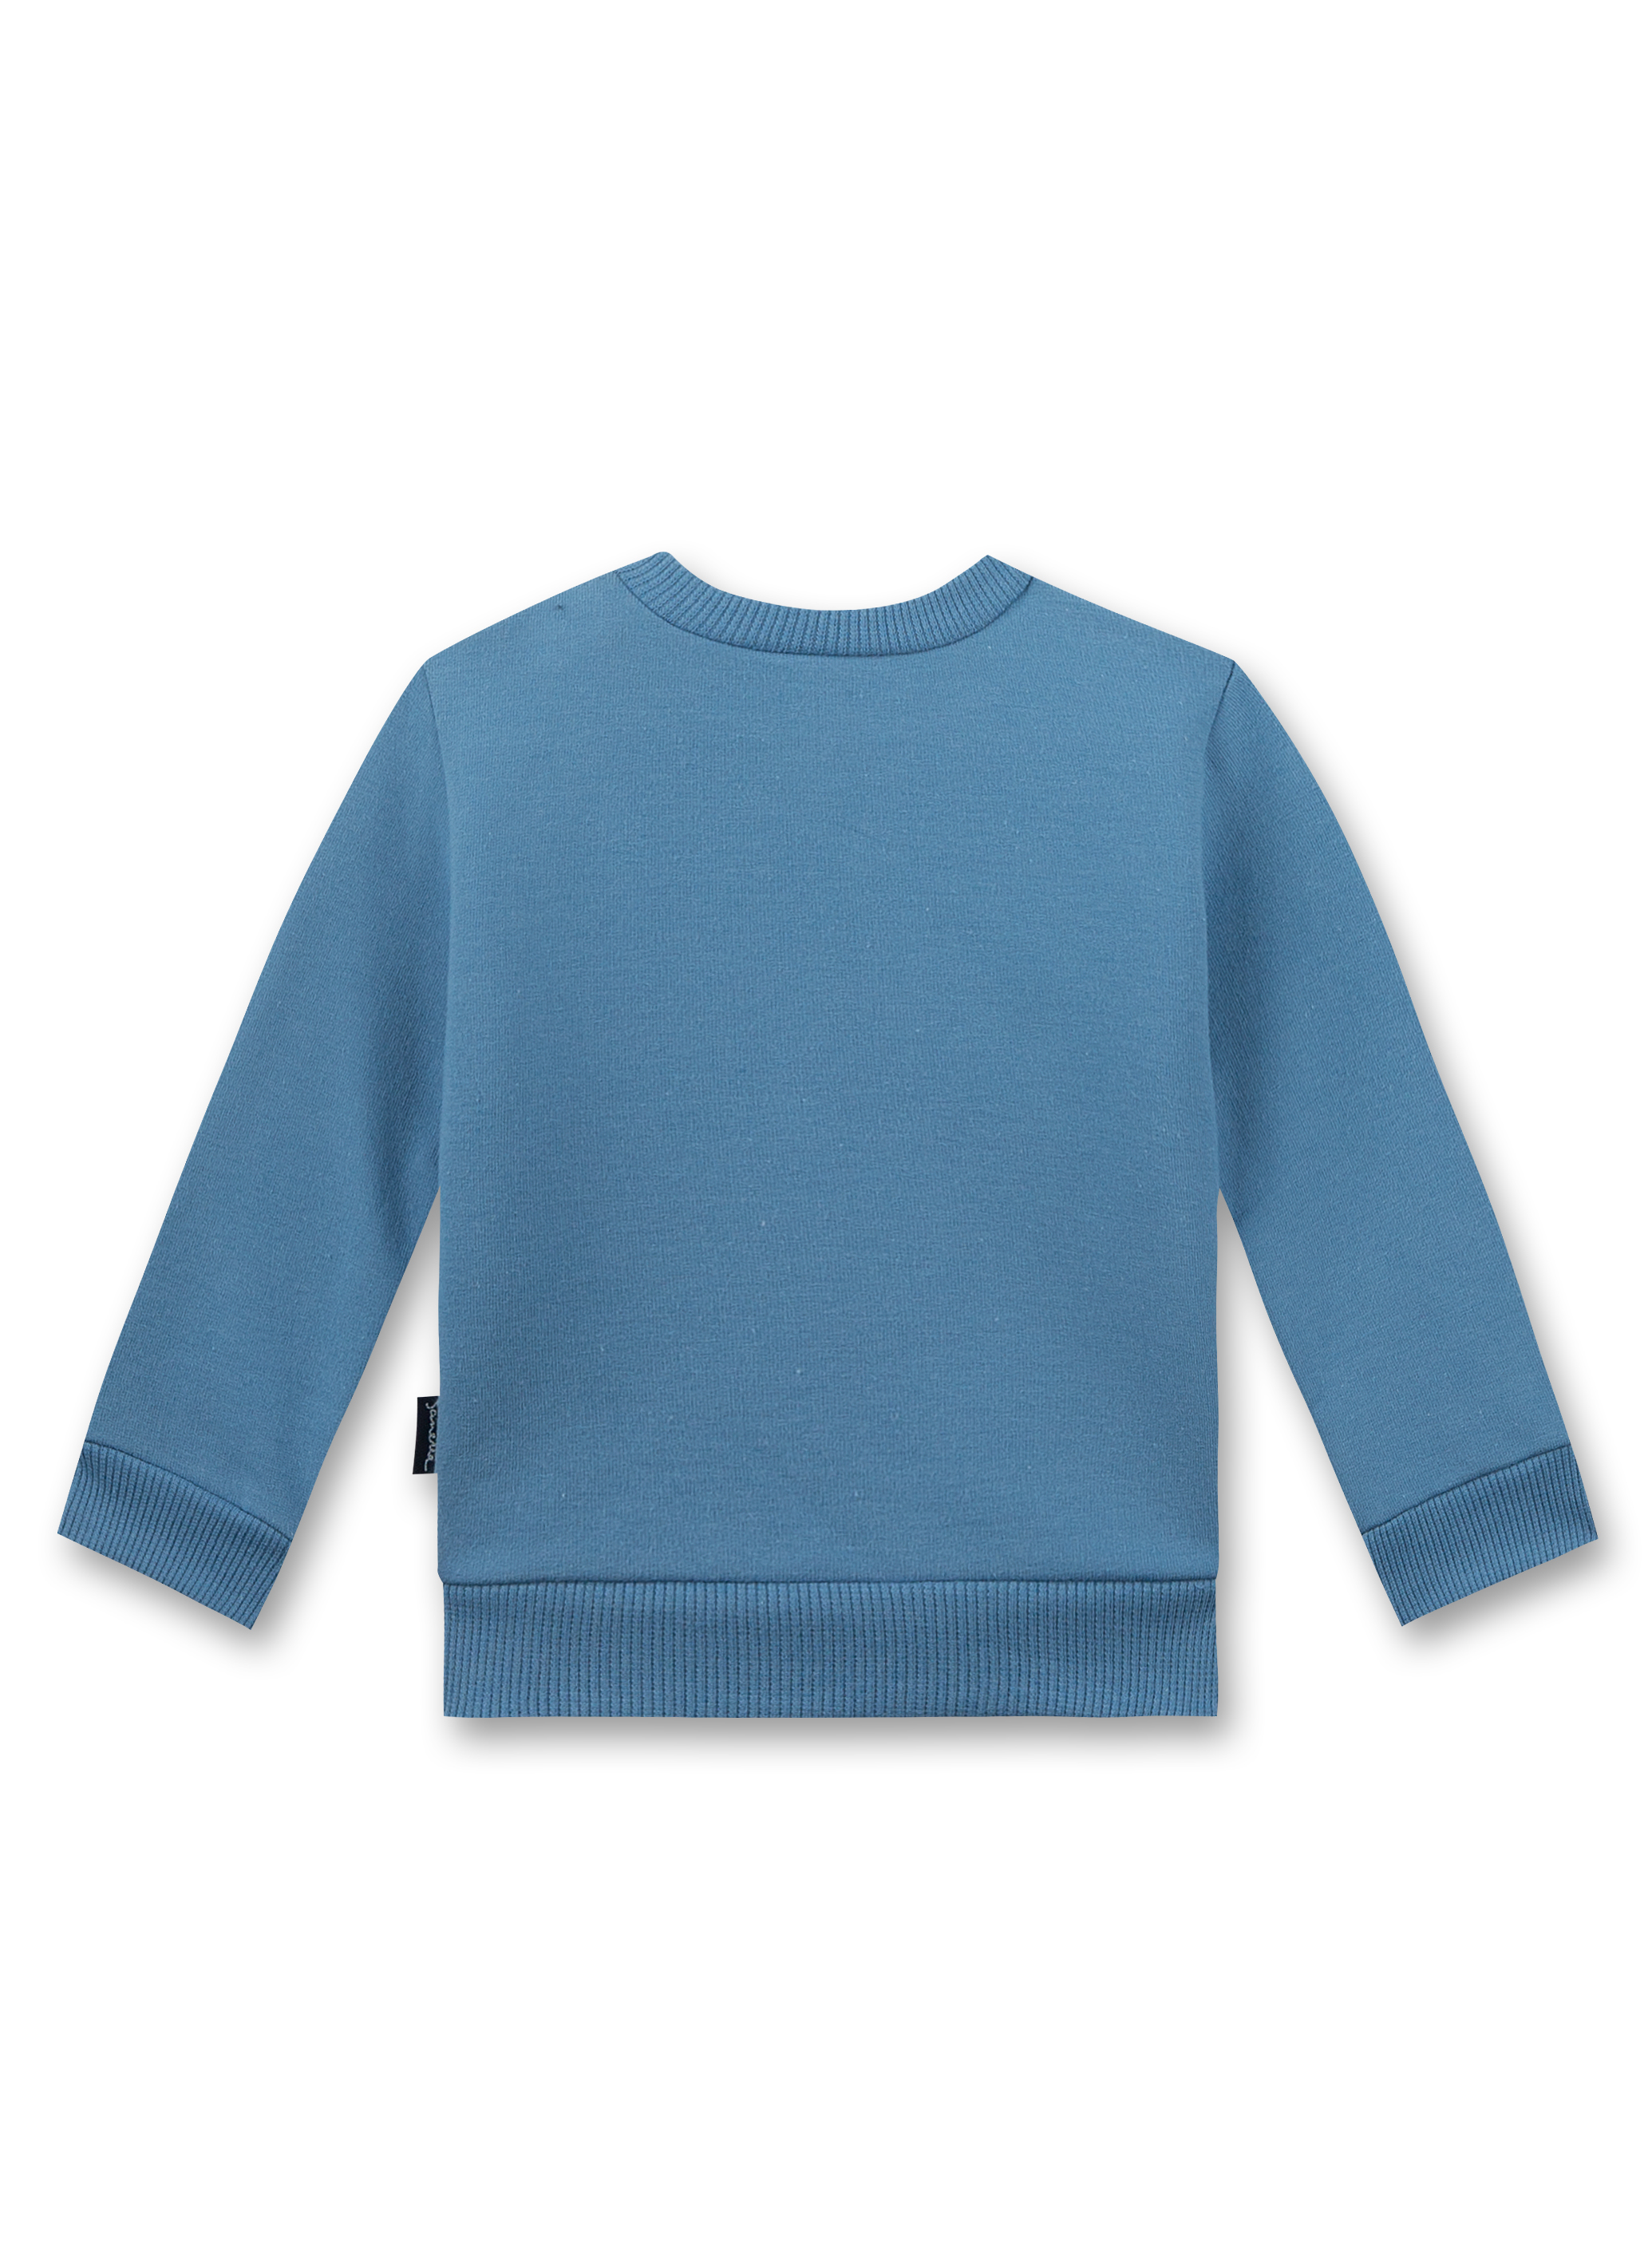 Jugnen-Sweatshirt Blau